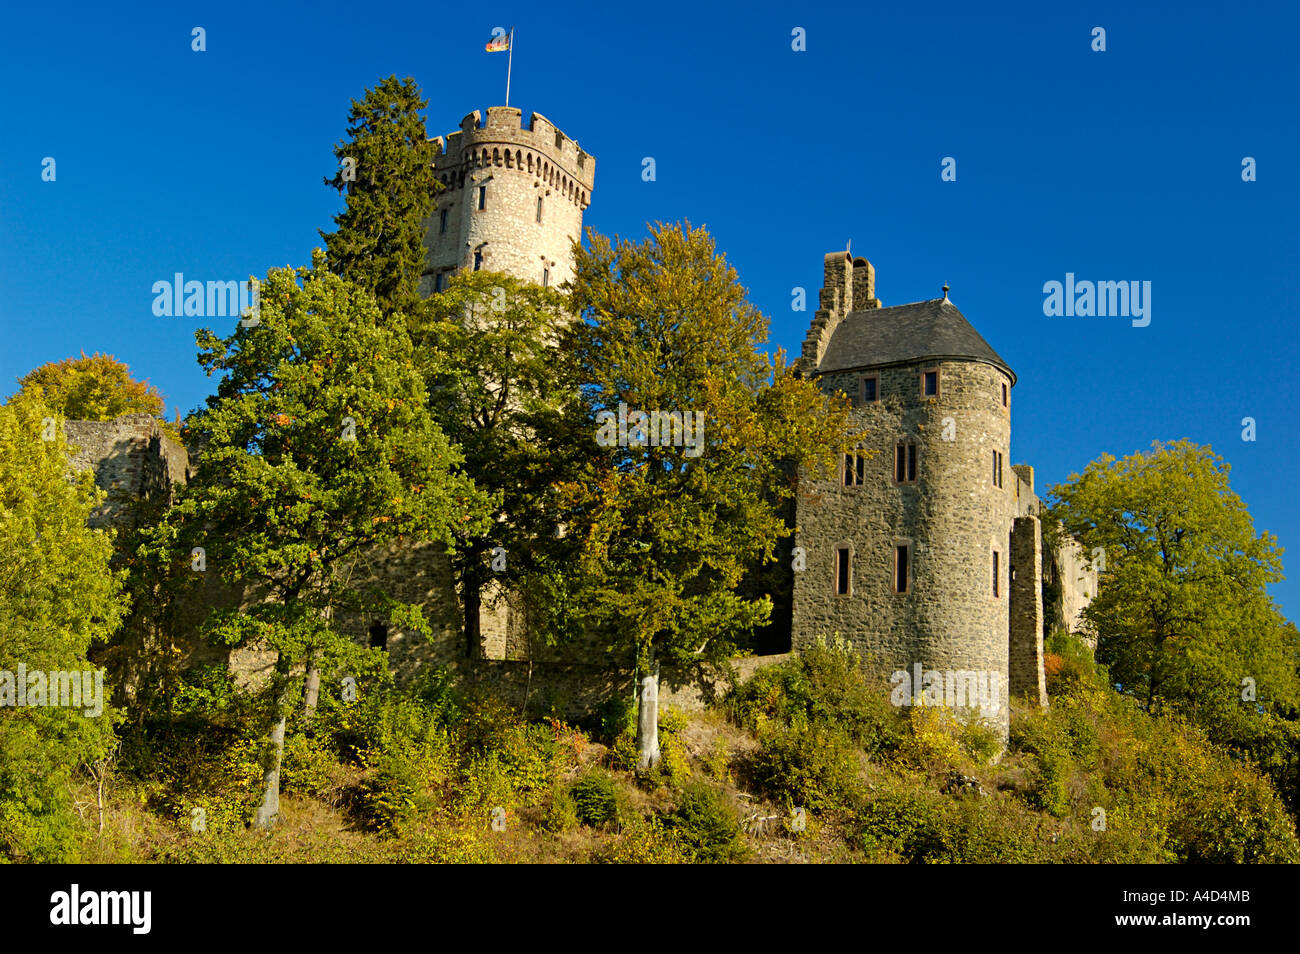 Lowenburg Castle near Gerolstein Germany Stock Photo